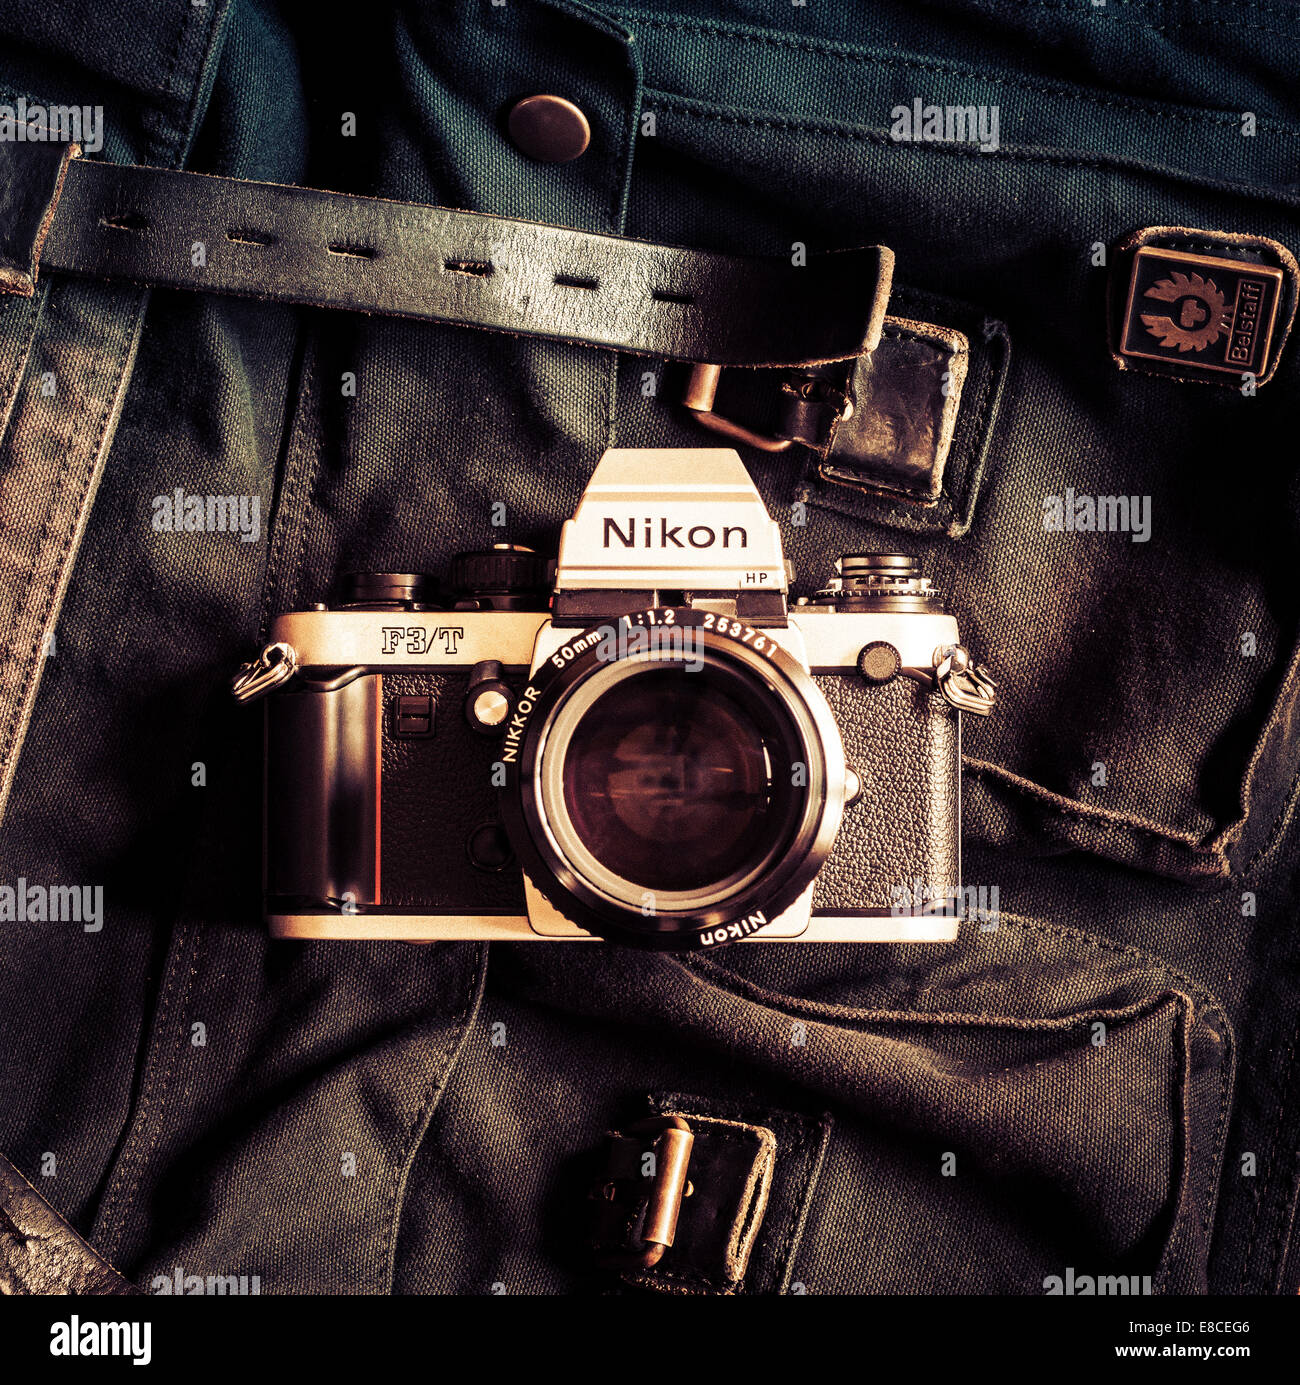 Nikon F3/T klassische Filmkamera mit Belstaff Tasche. Stockfoto